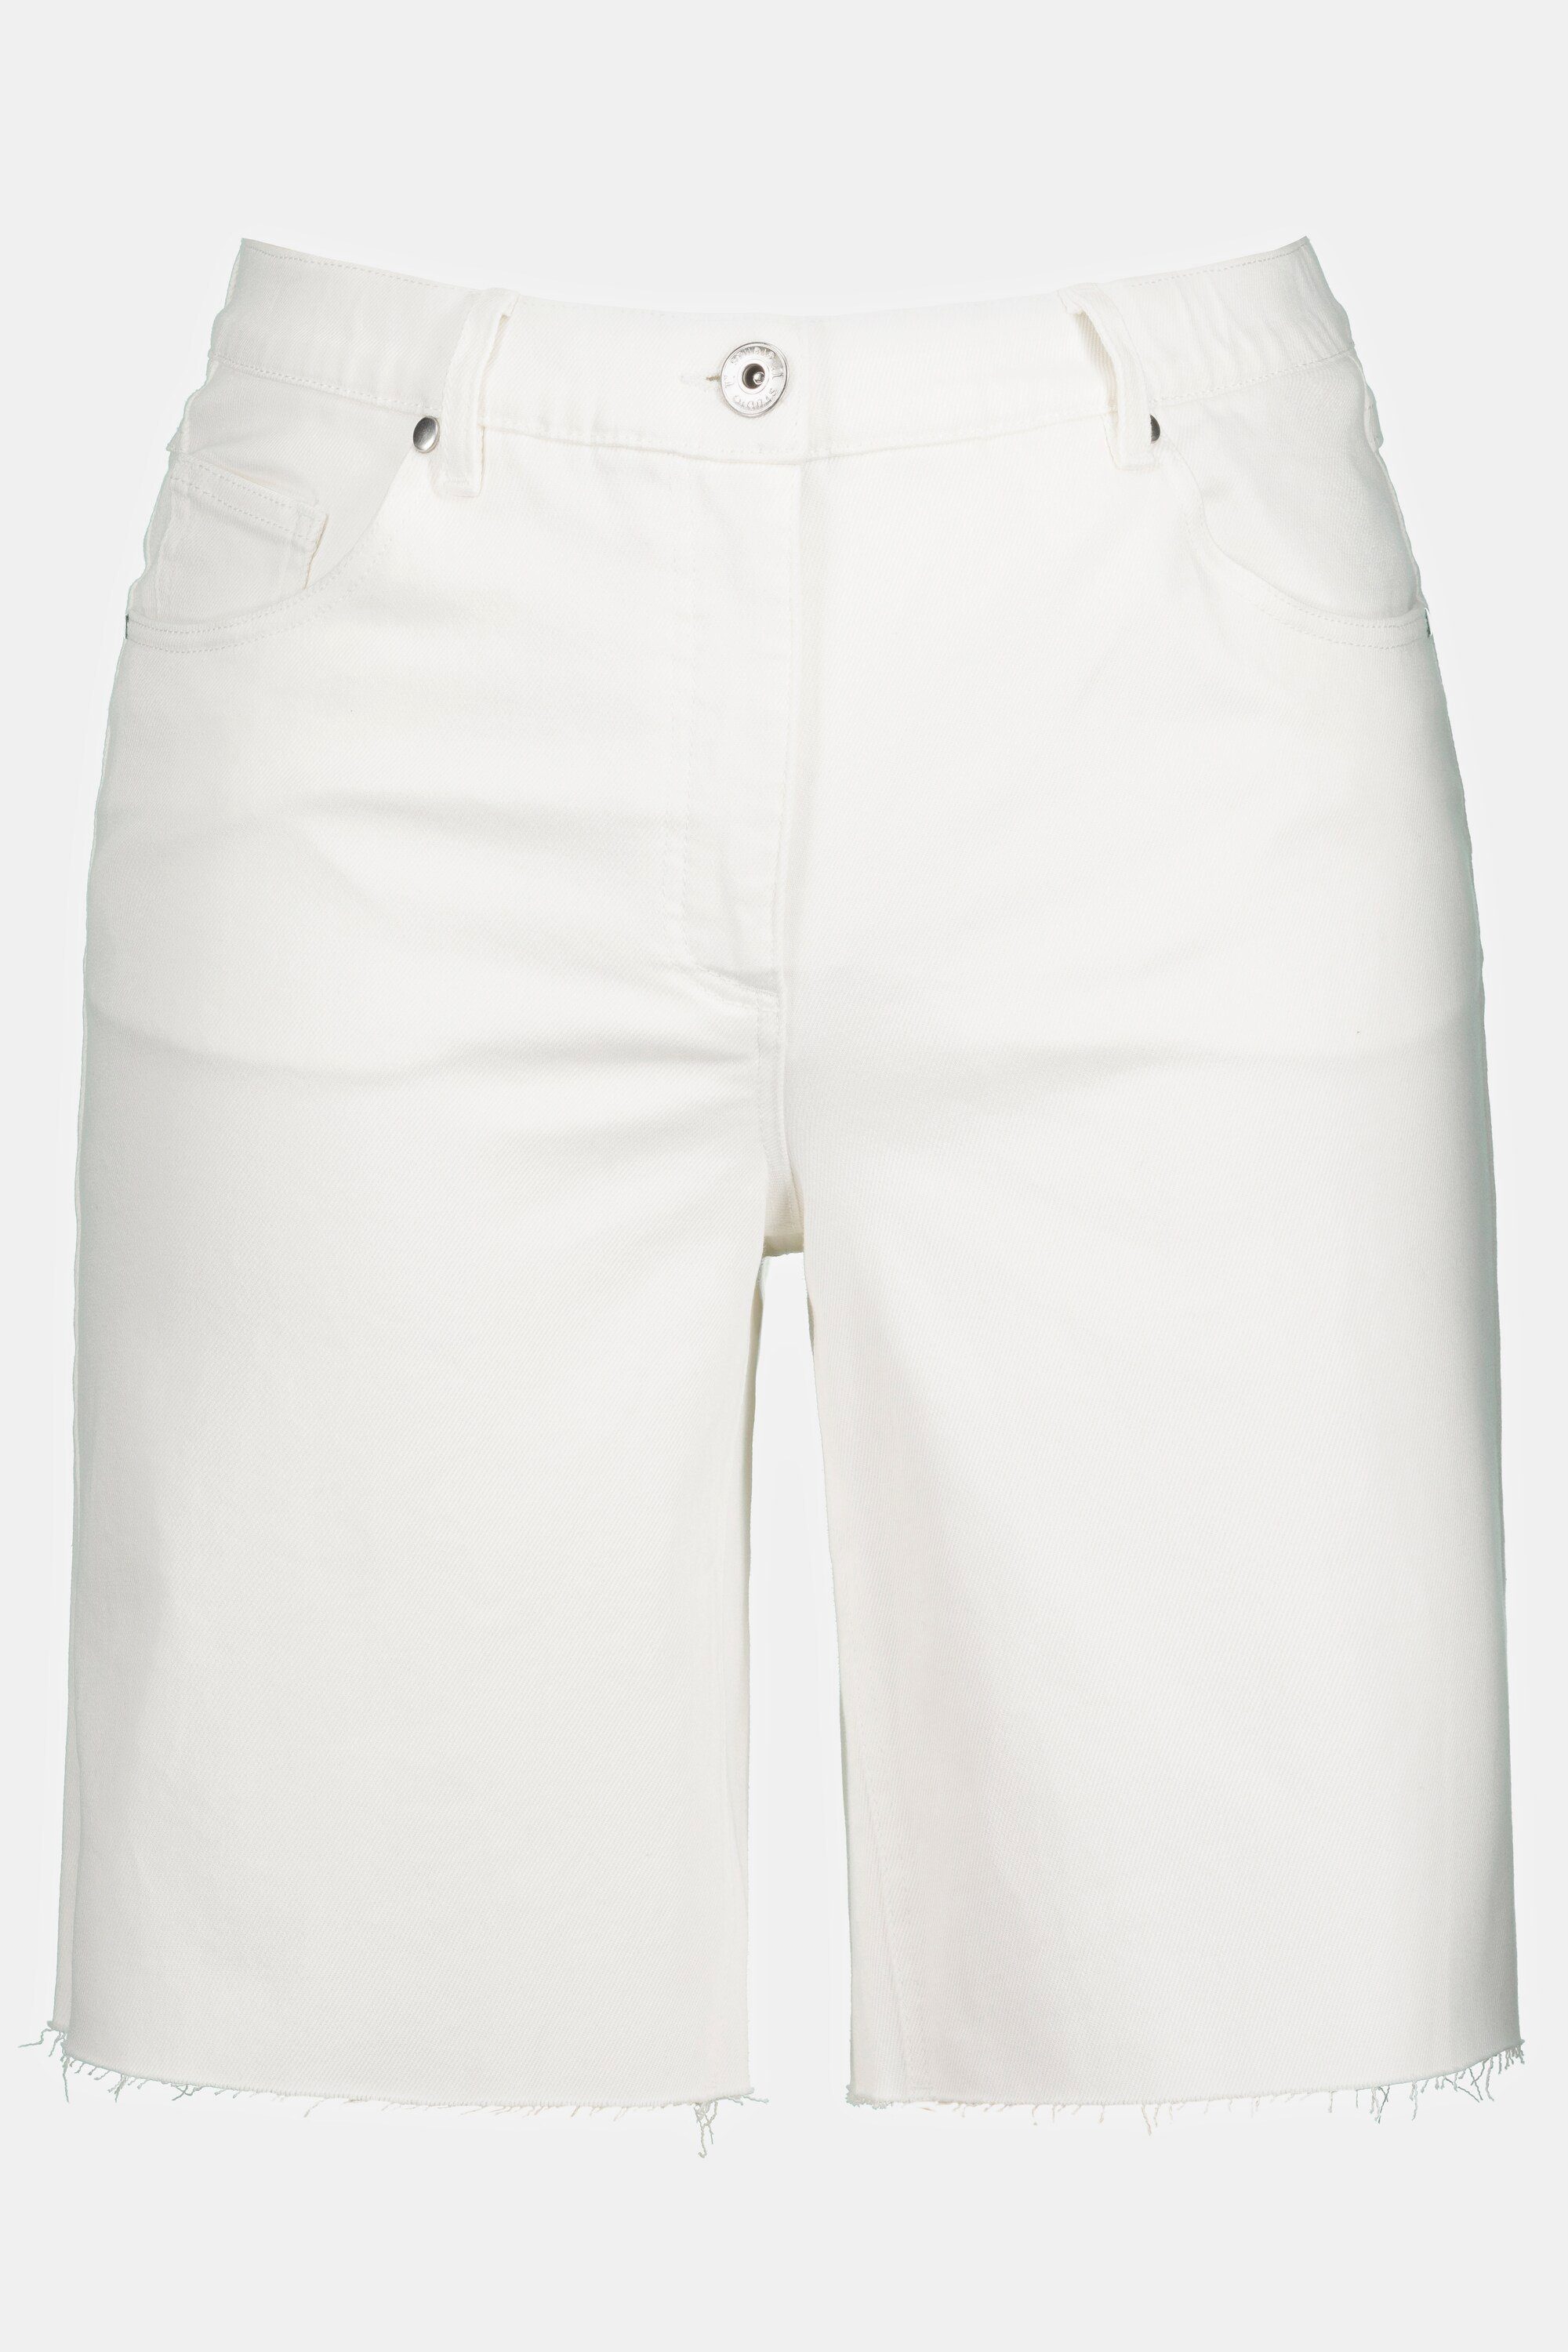 Studio Untold Jeansshorts Waist High Jeans-Shorts 5-Pocket offwhite